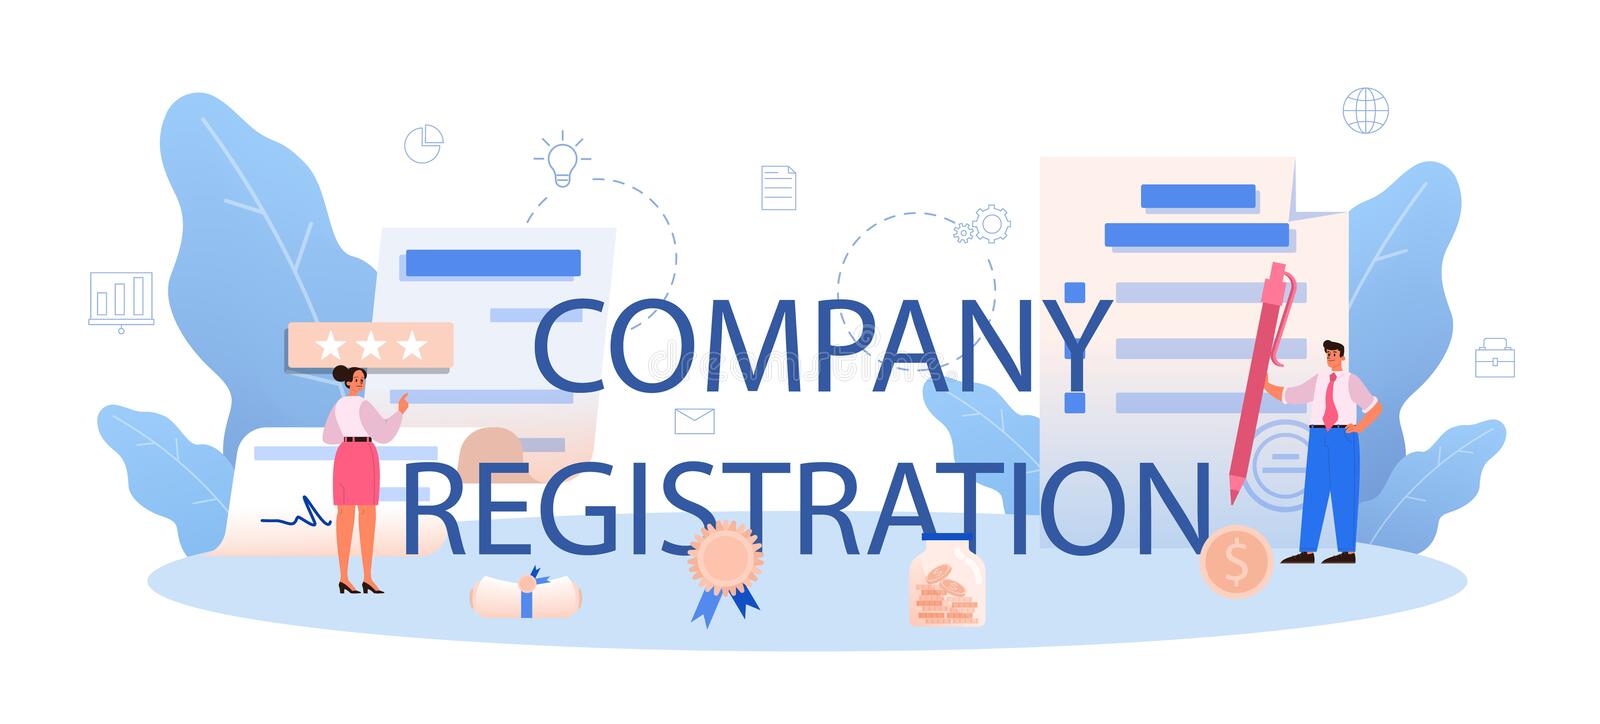 New company registration